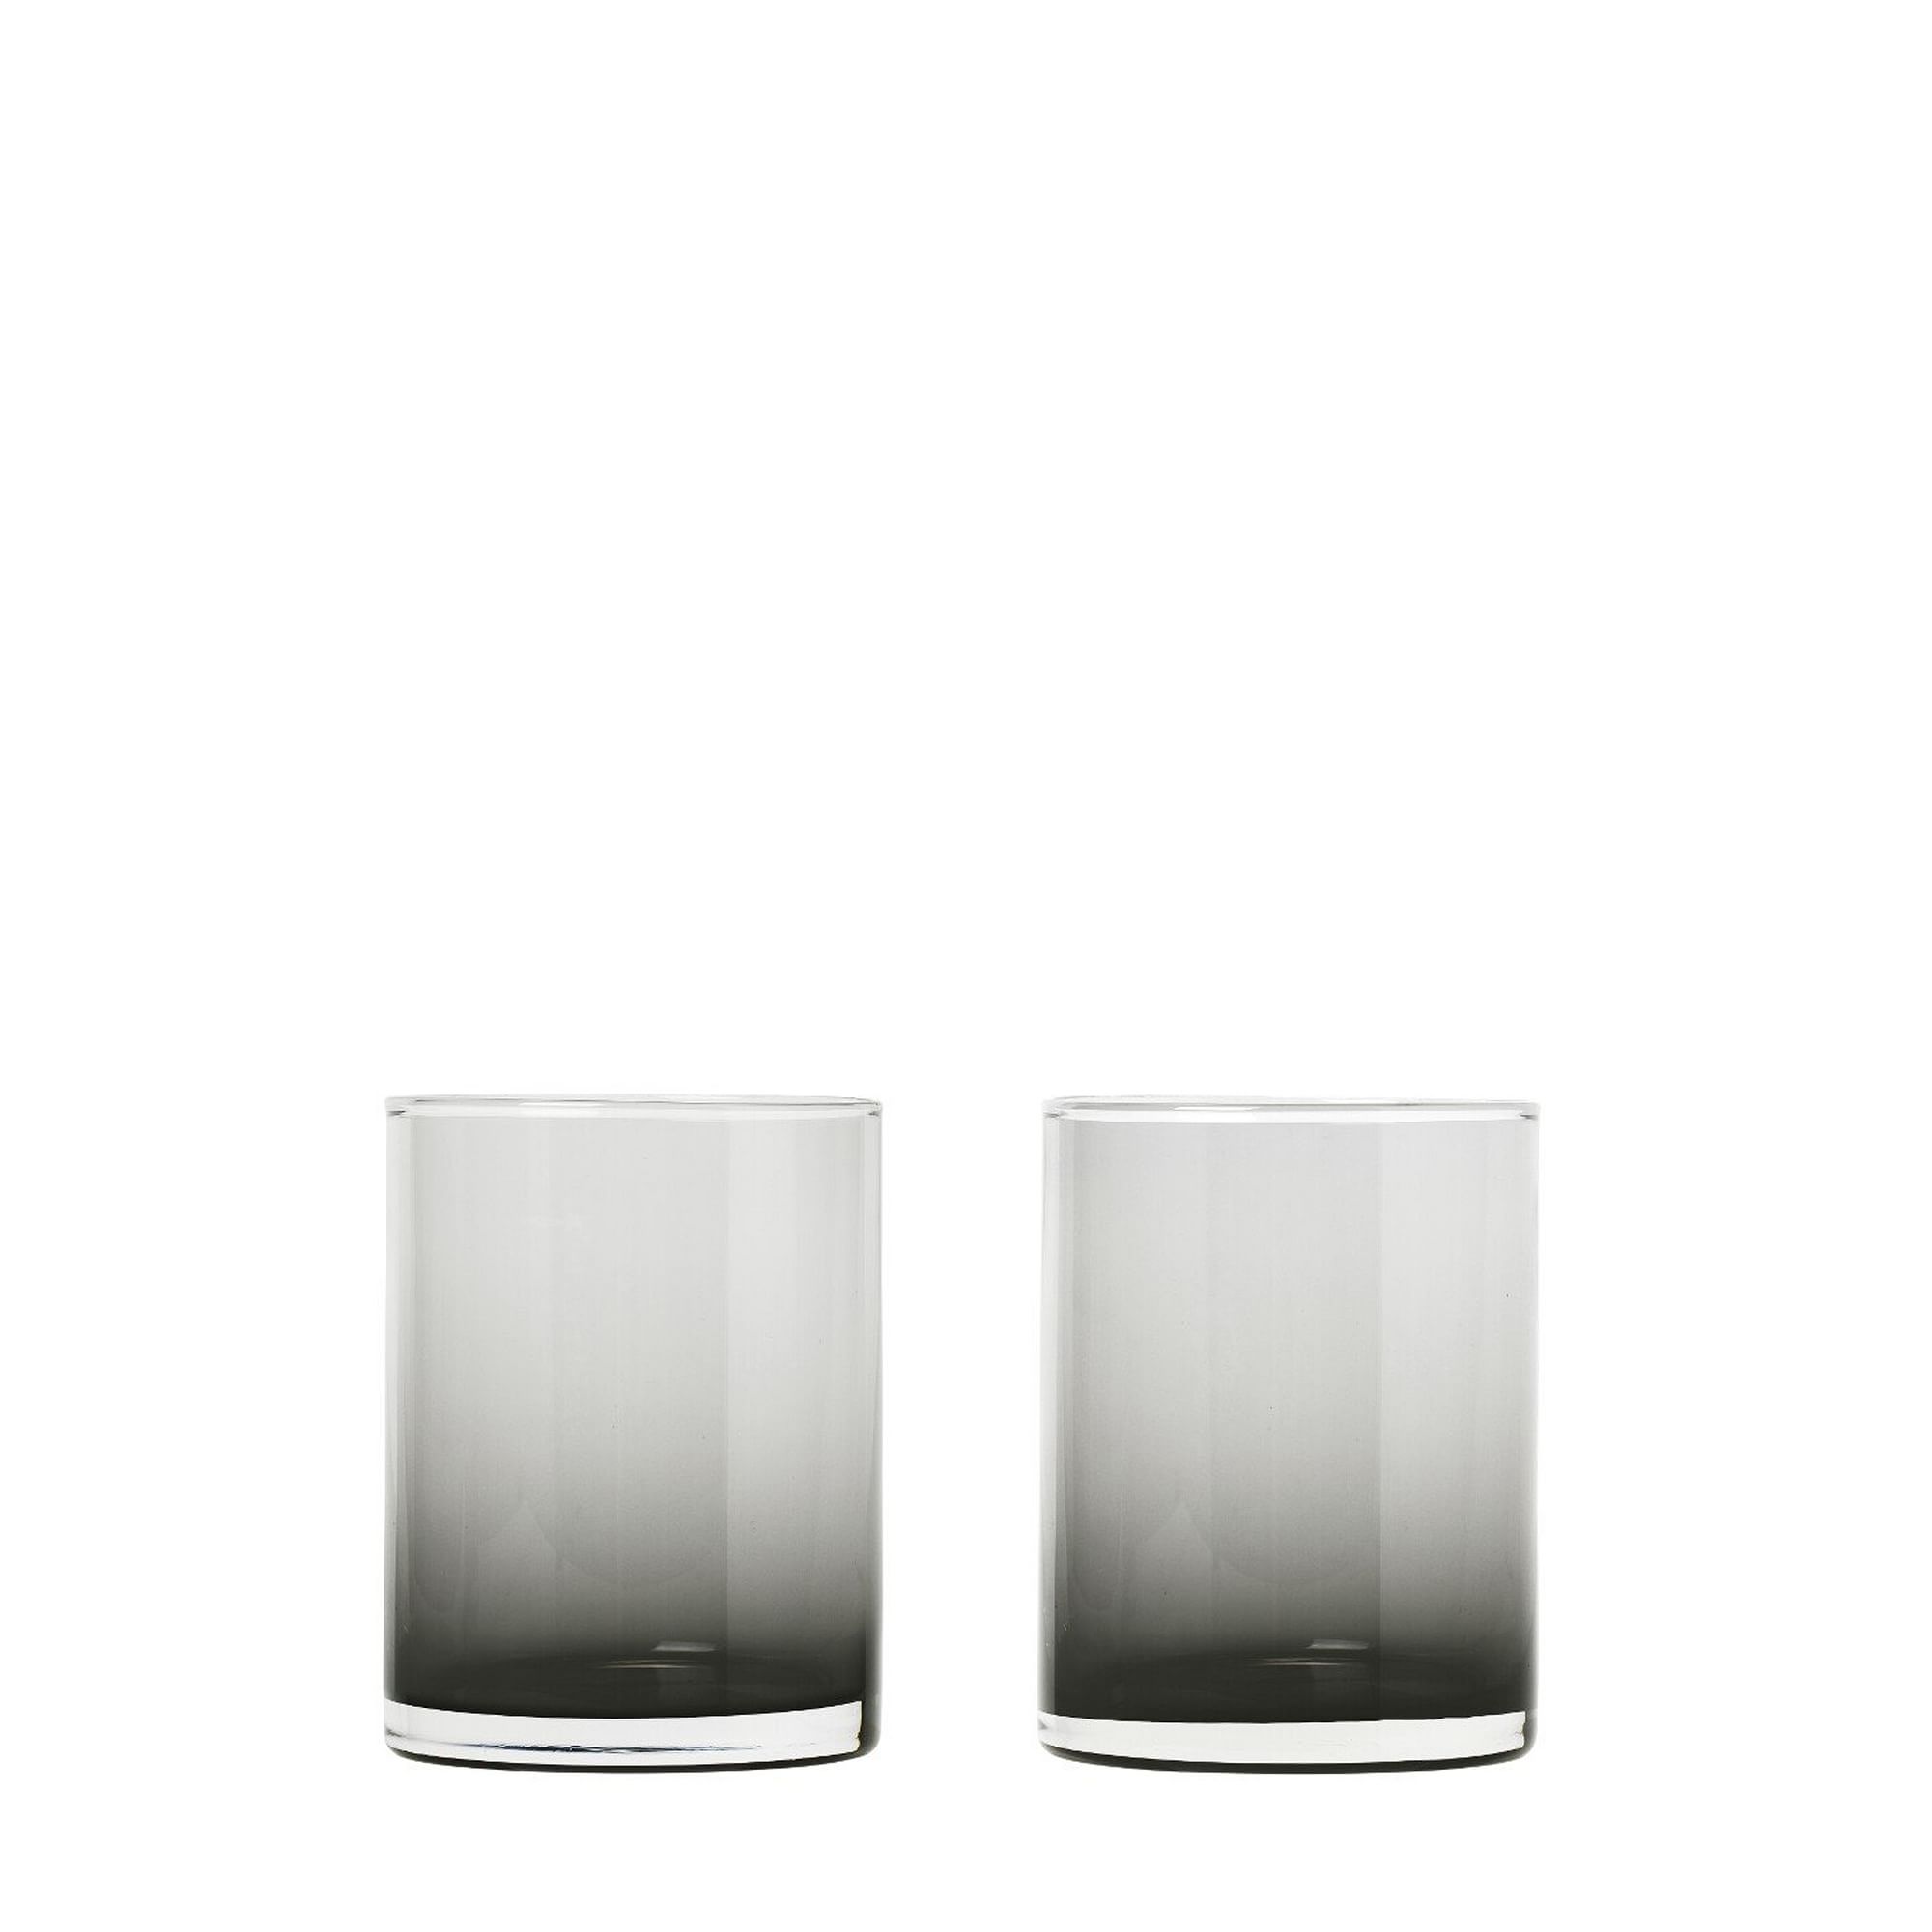 Mera Glassware Collection | West Elm